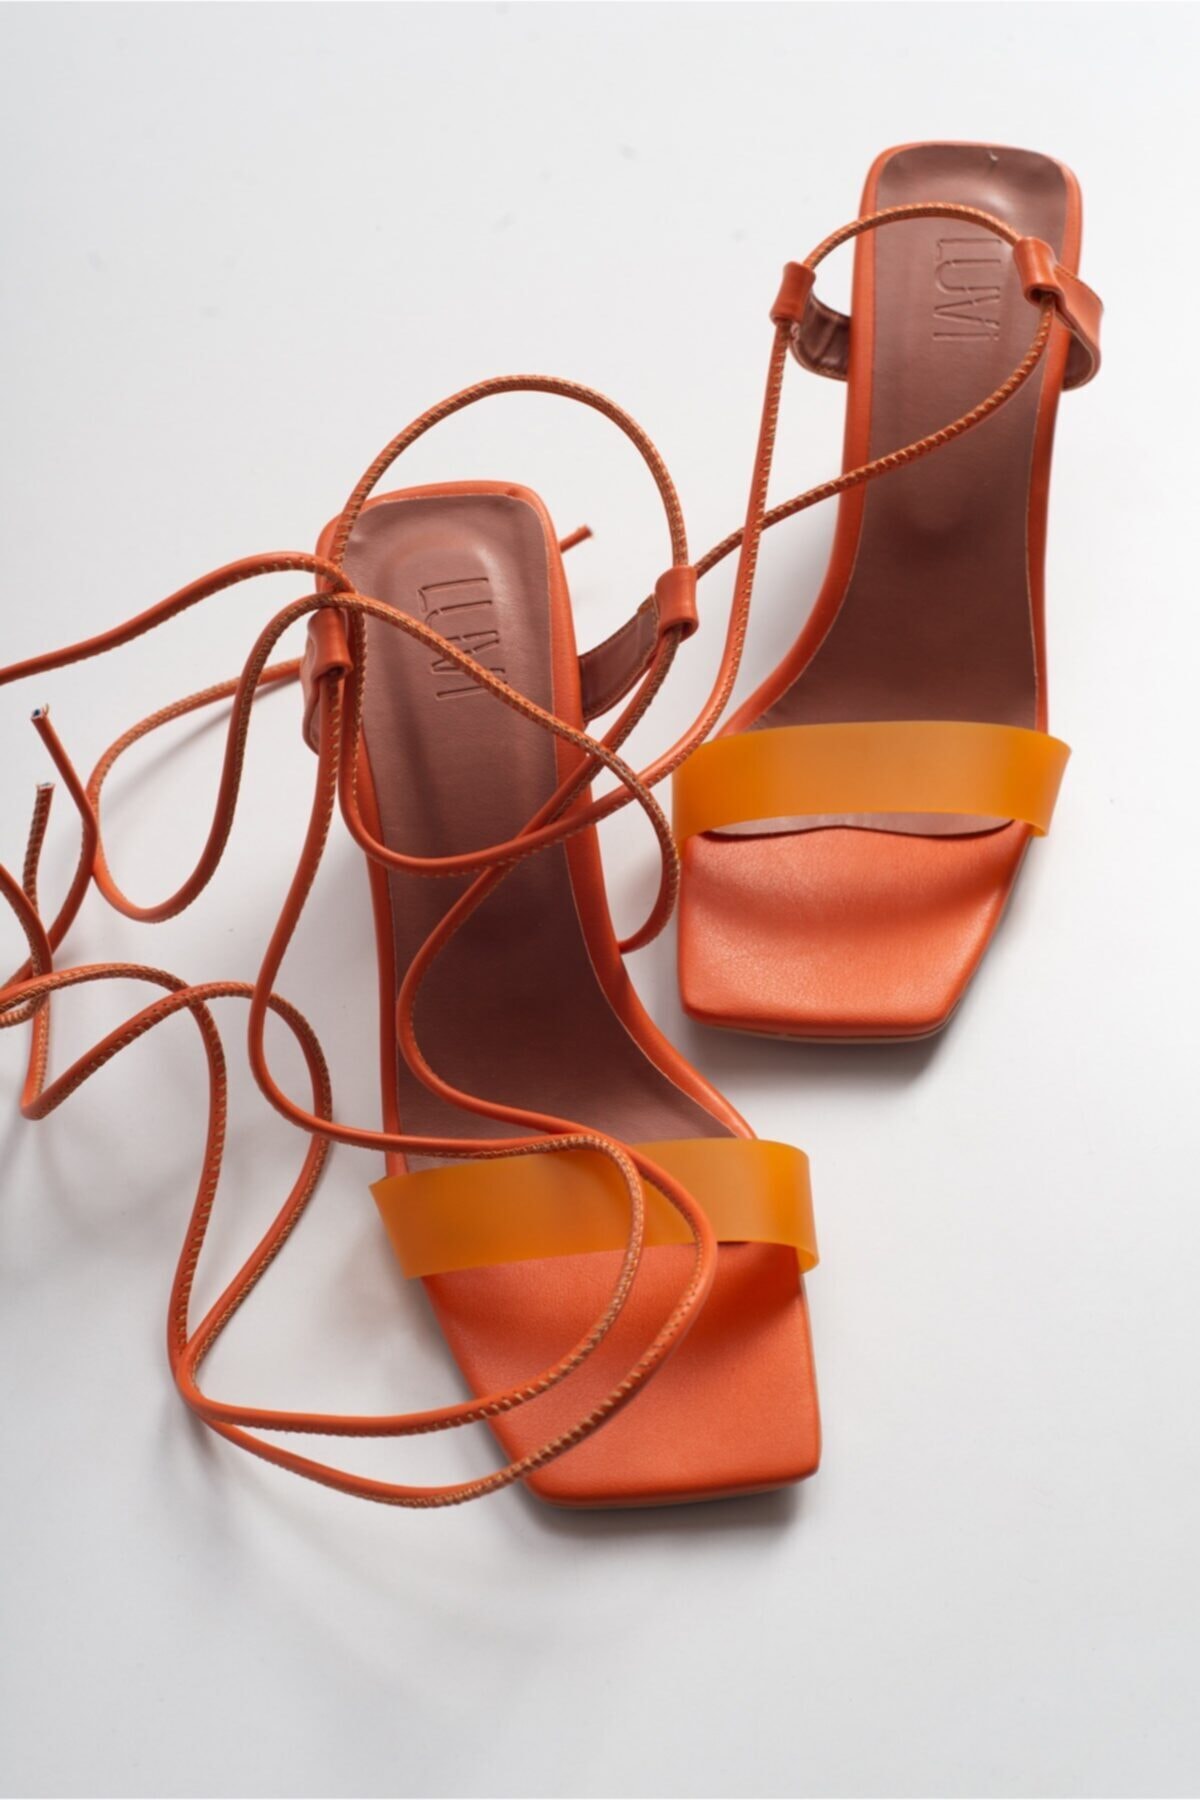 LuviShoes Women's Orange Skinny Heel Sandals